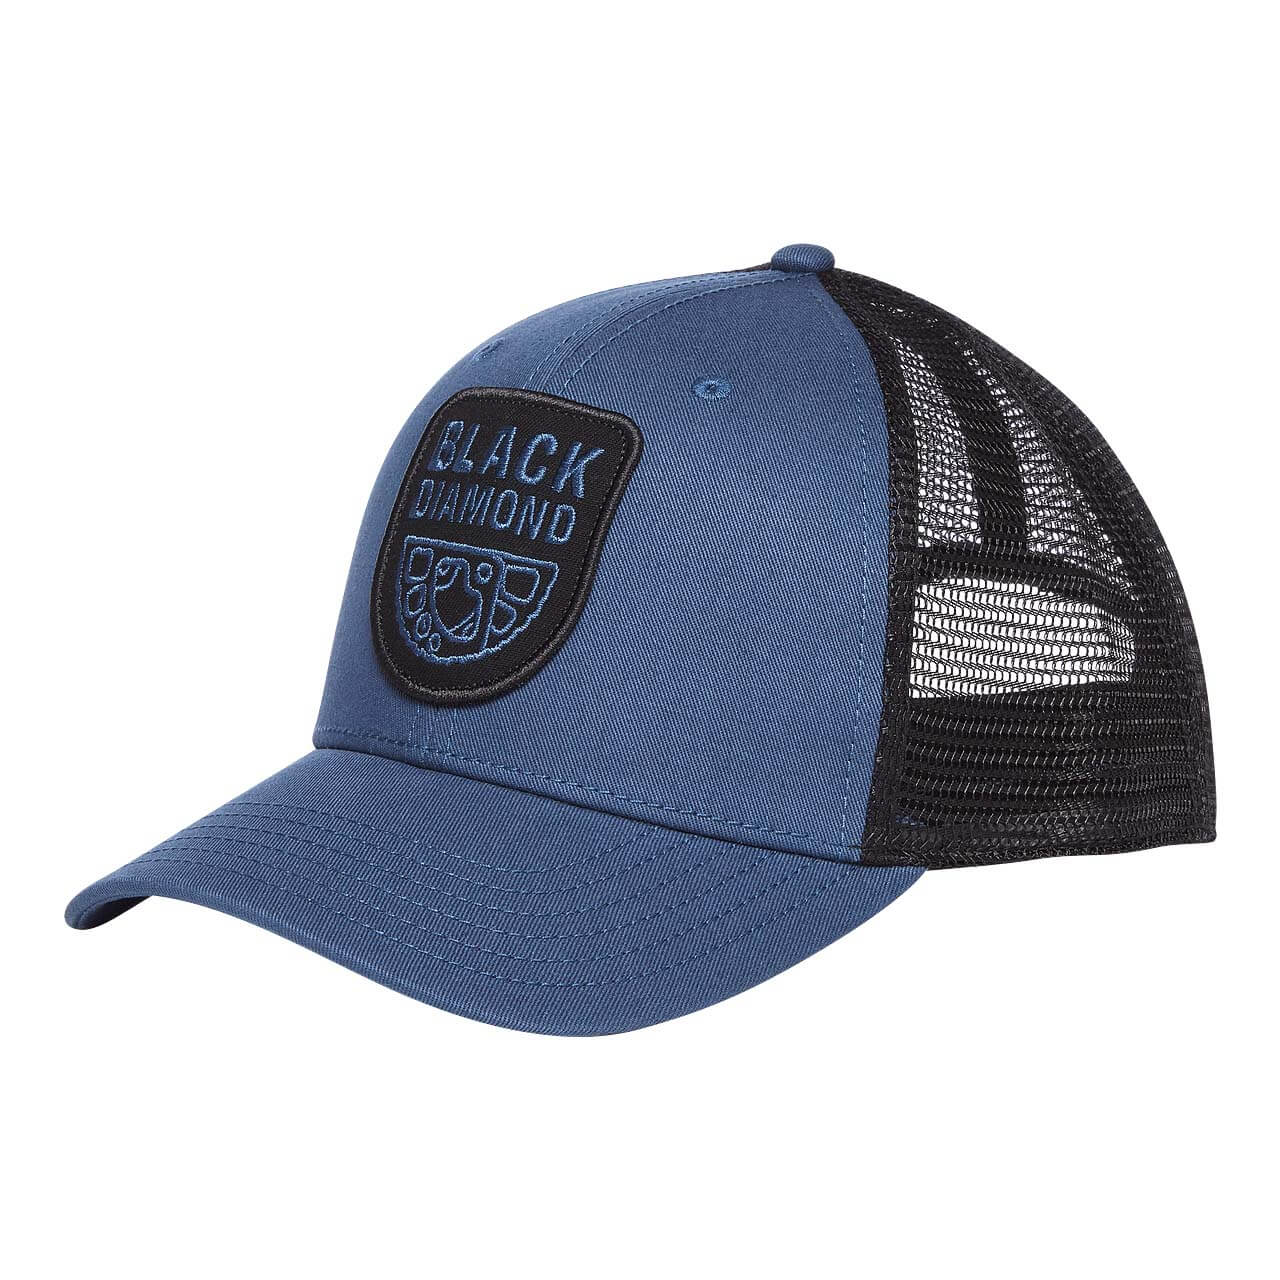 Black Diamond Trucker Hat - Ink Blue/Black